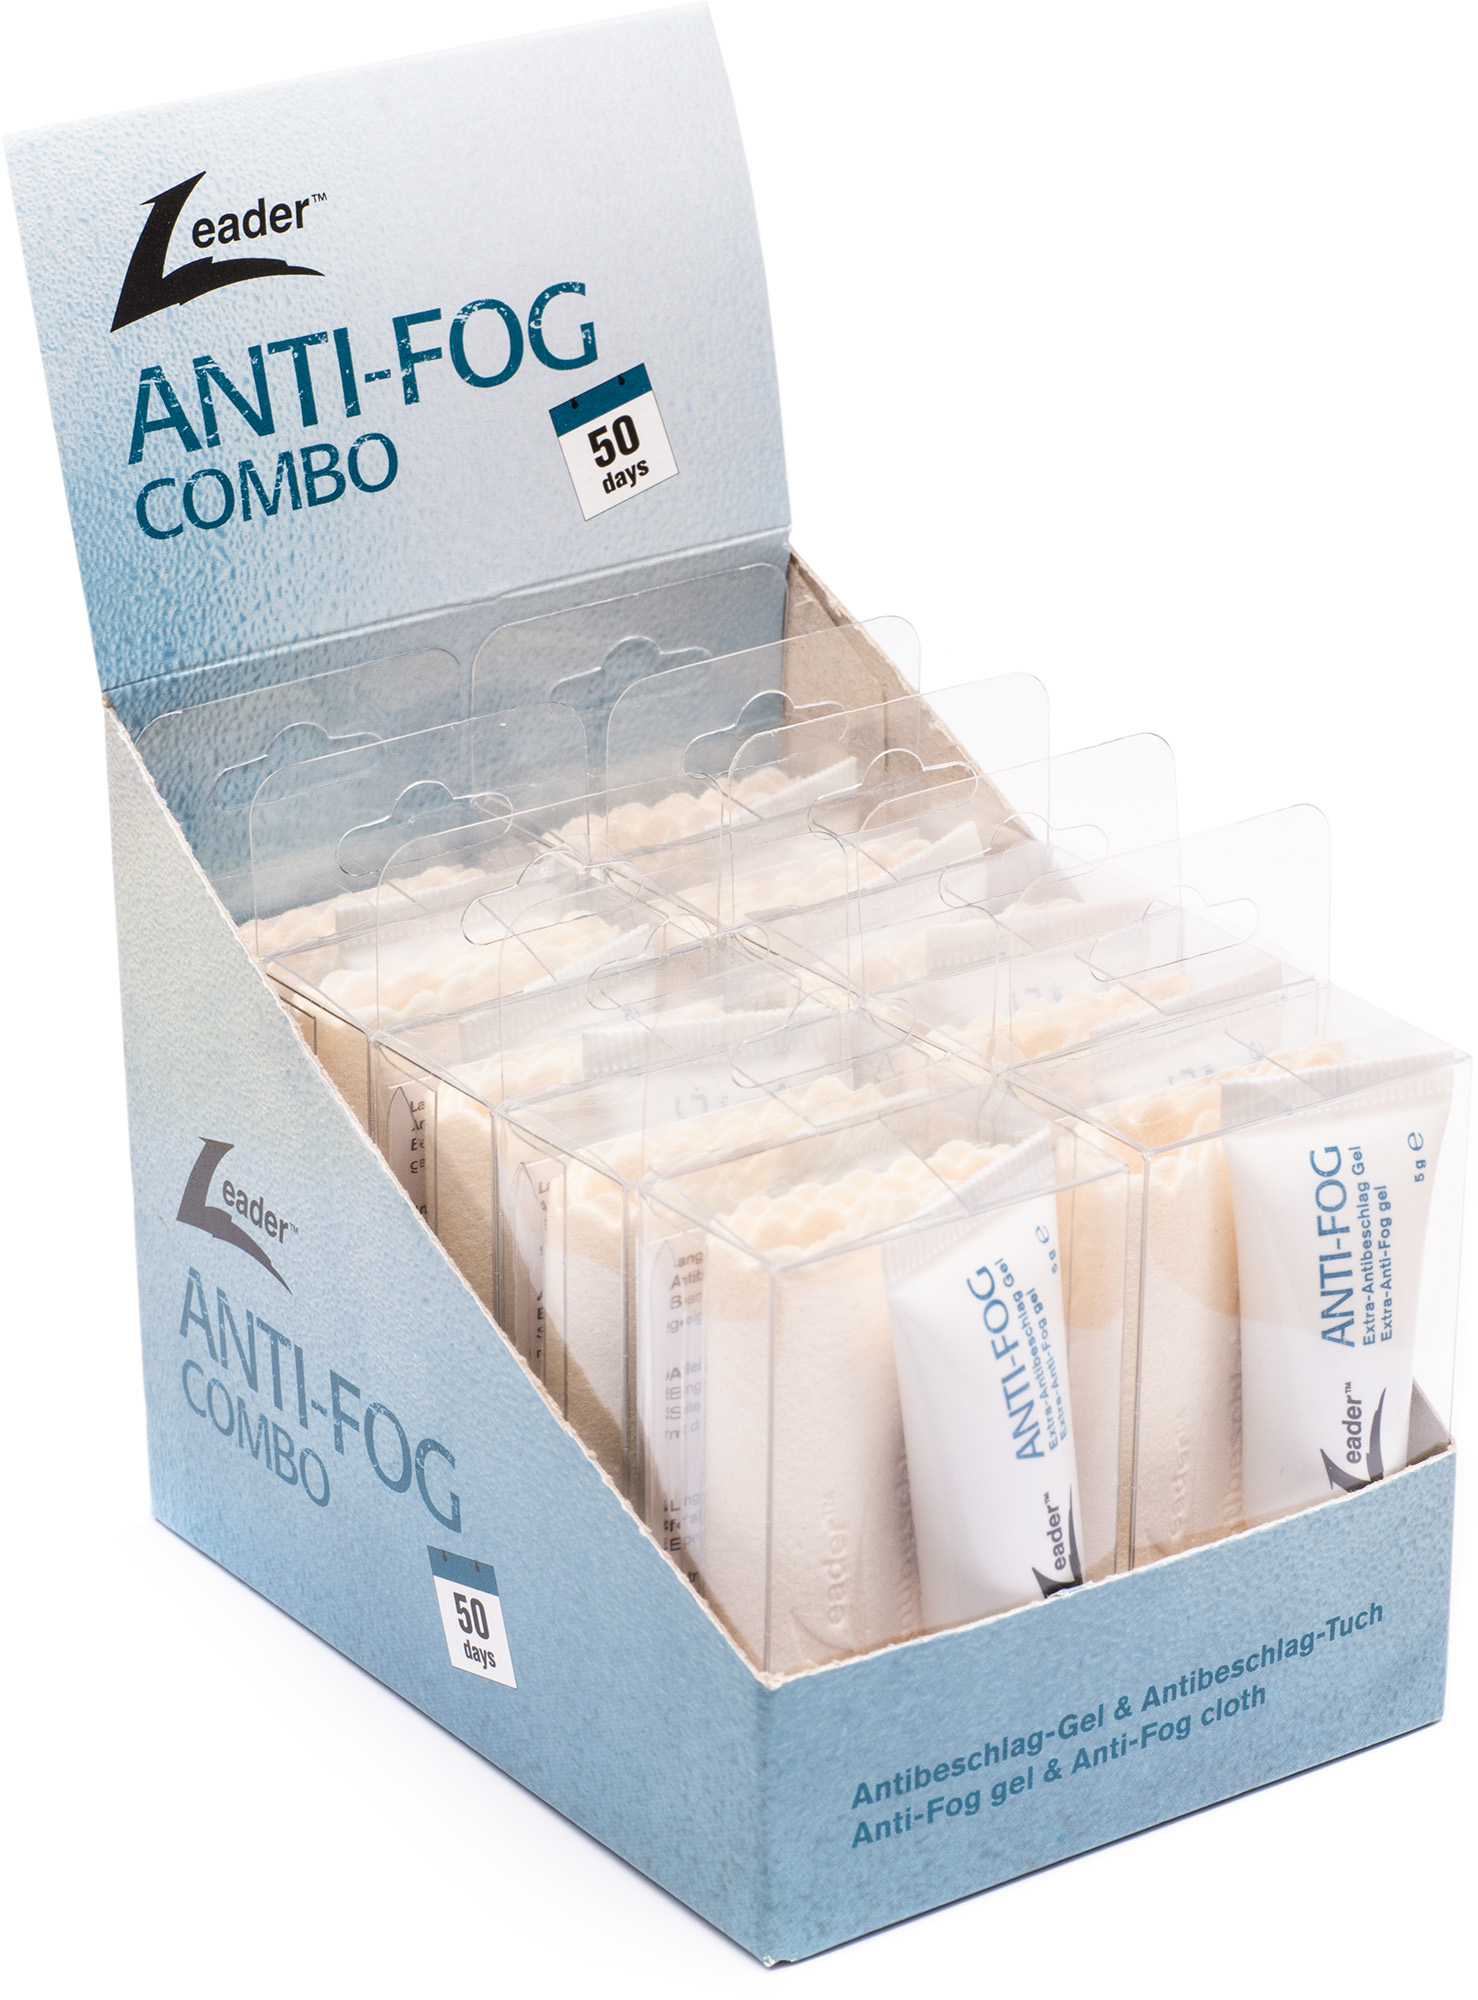 Anti-Fog Combo mit Dosierspitze